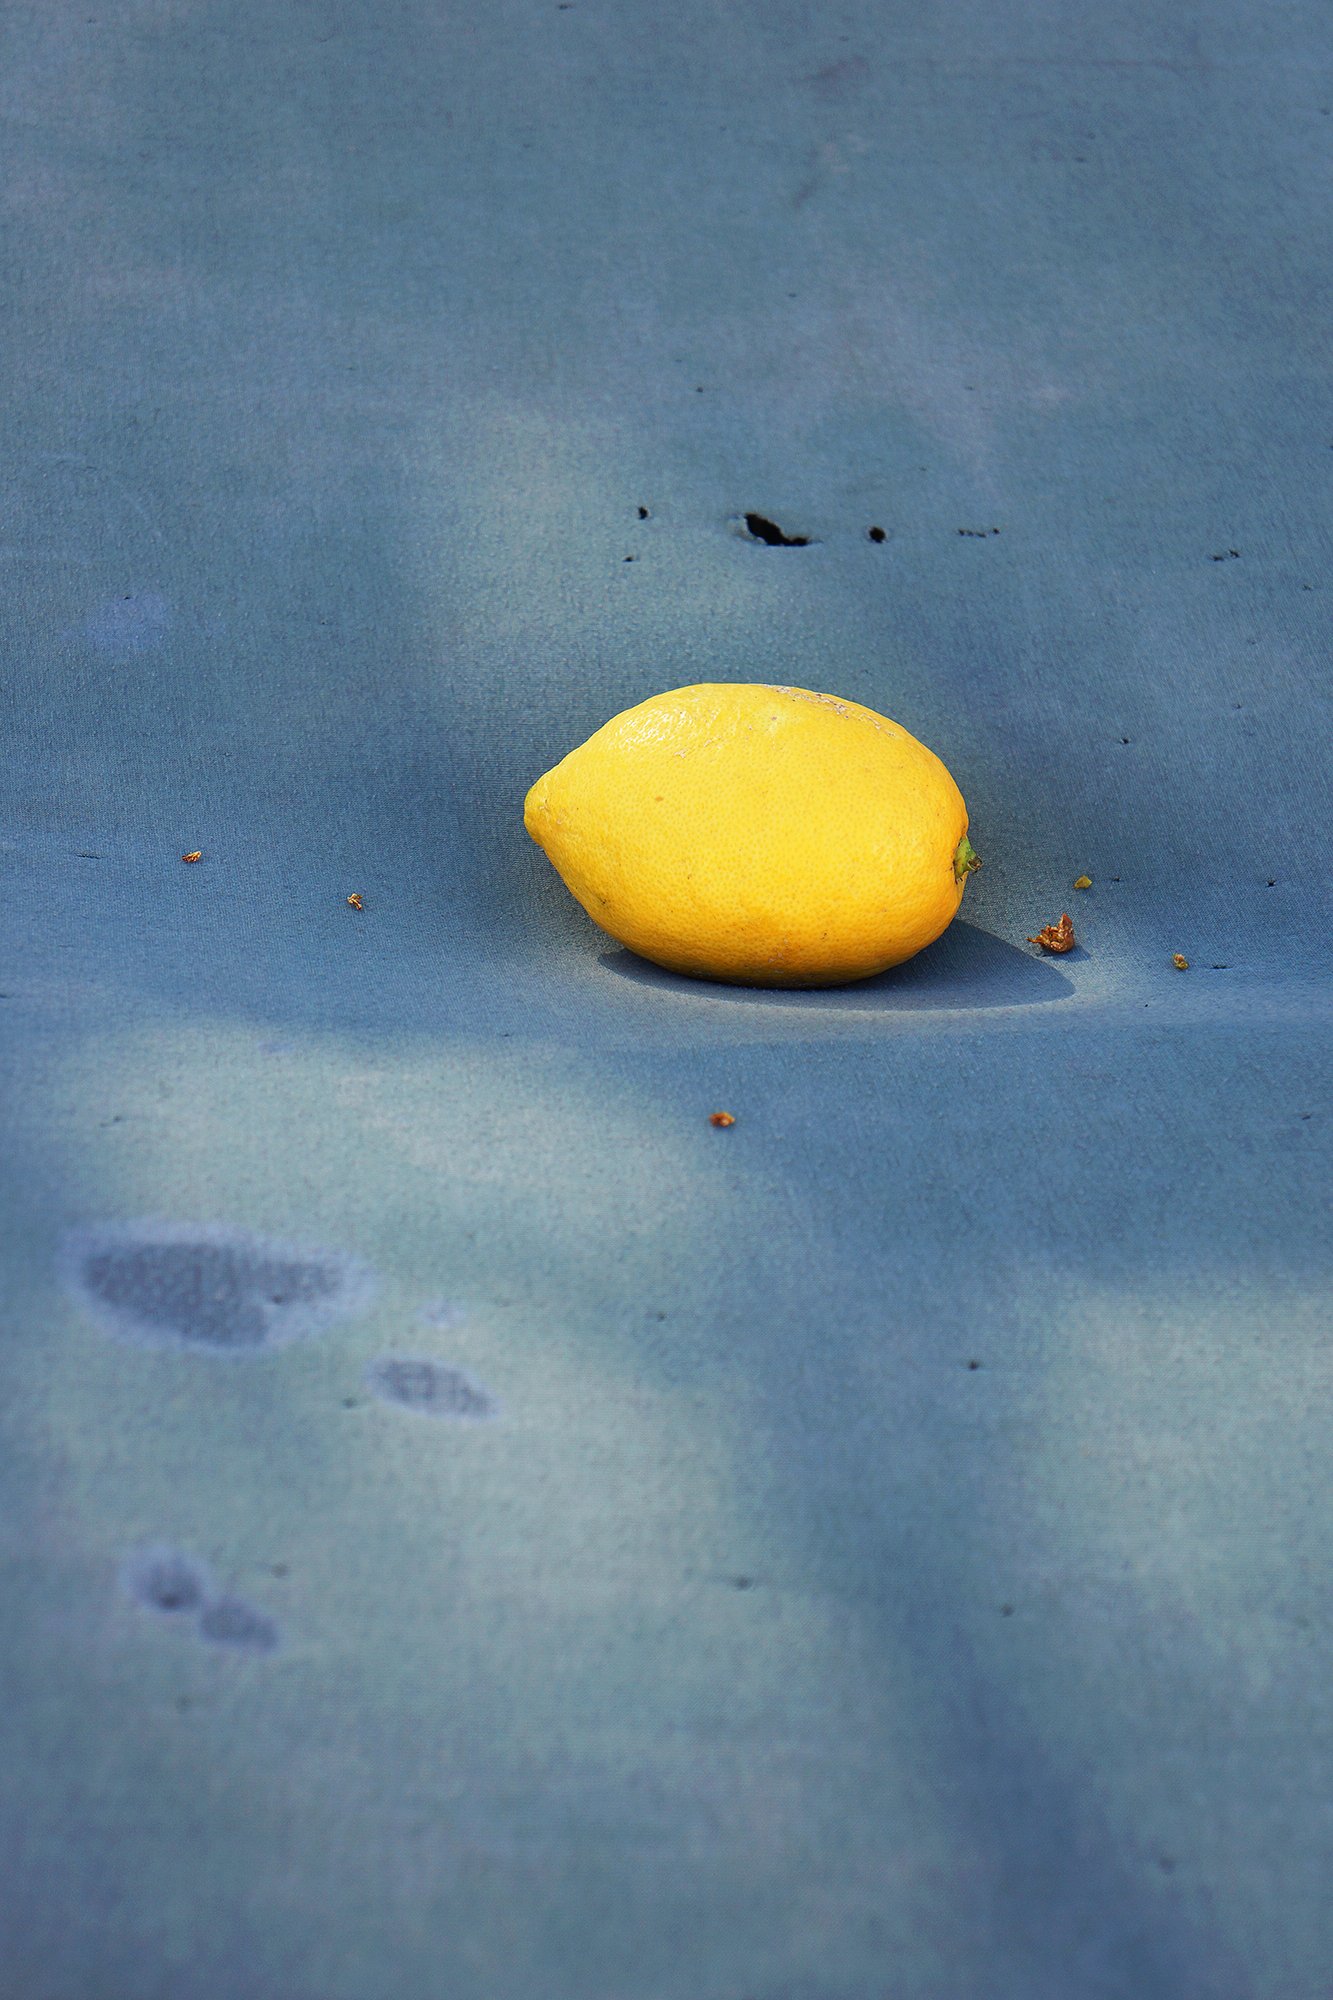 A bright yellow lemon glowing on a shady bluish hardtop ground.